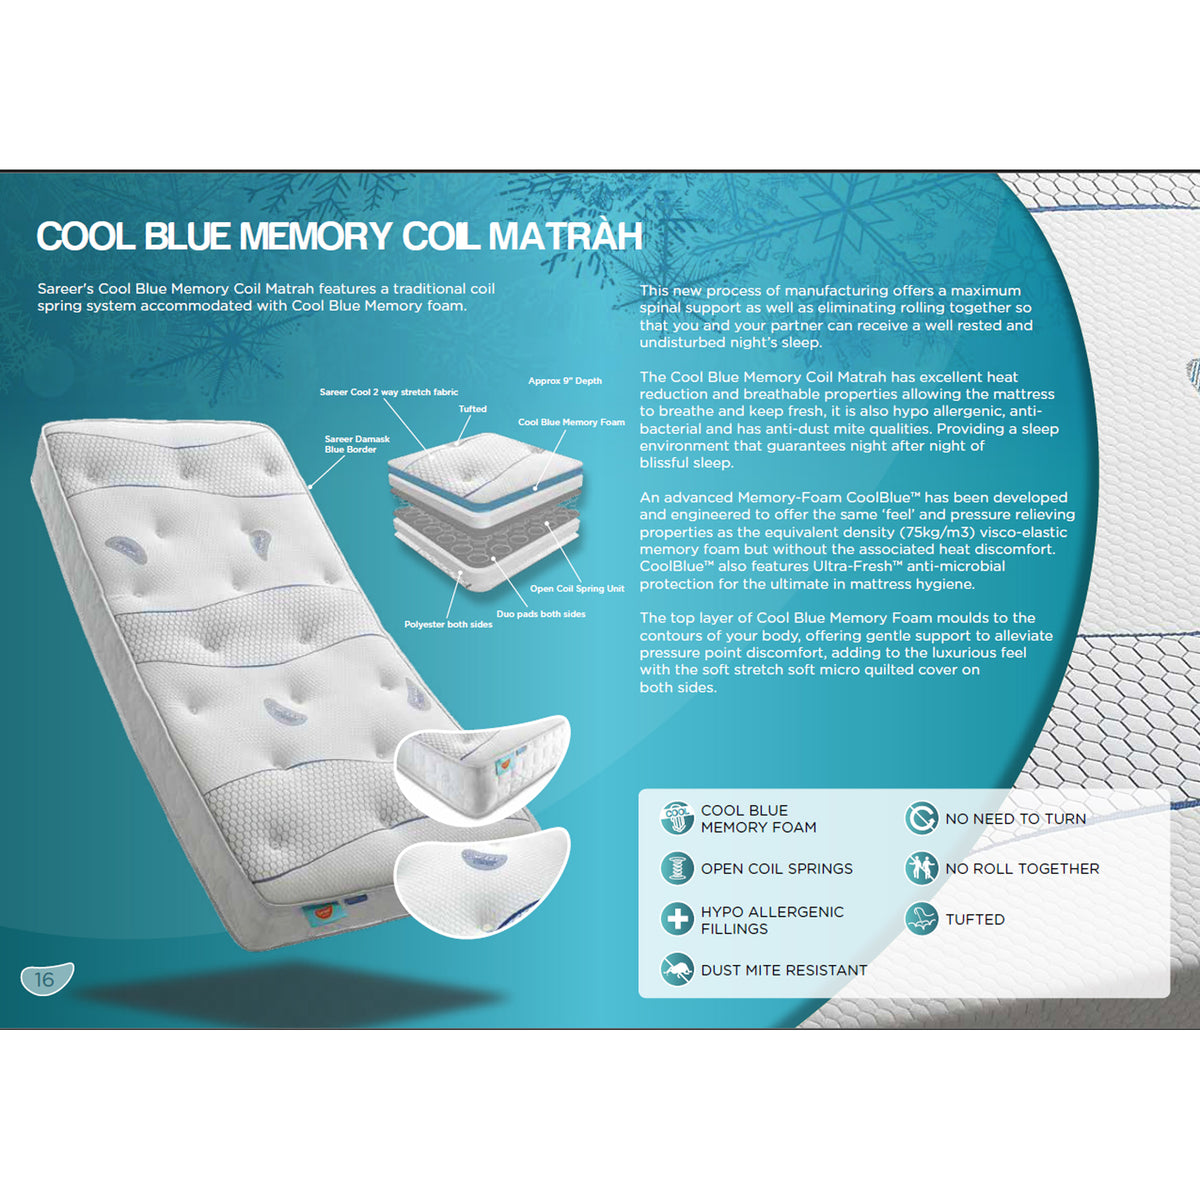 Matrah Cool Blue Memory Mattress